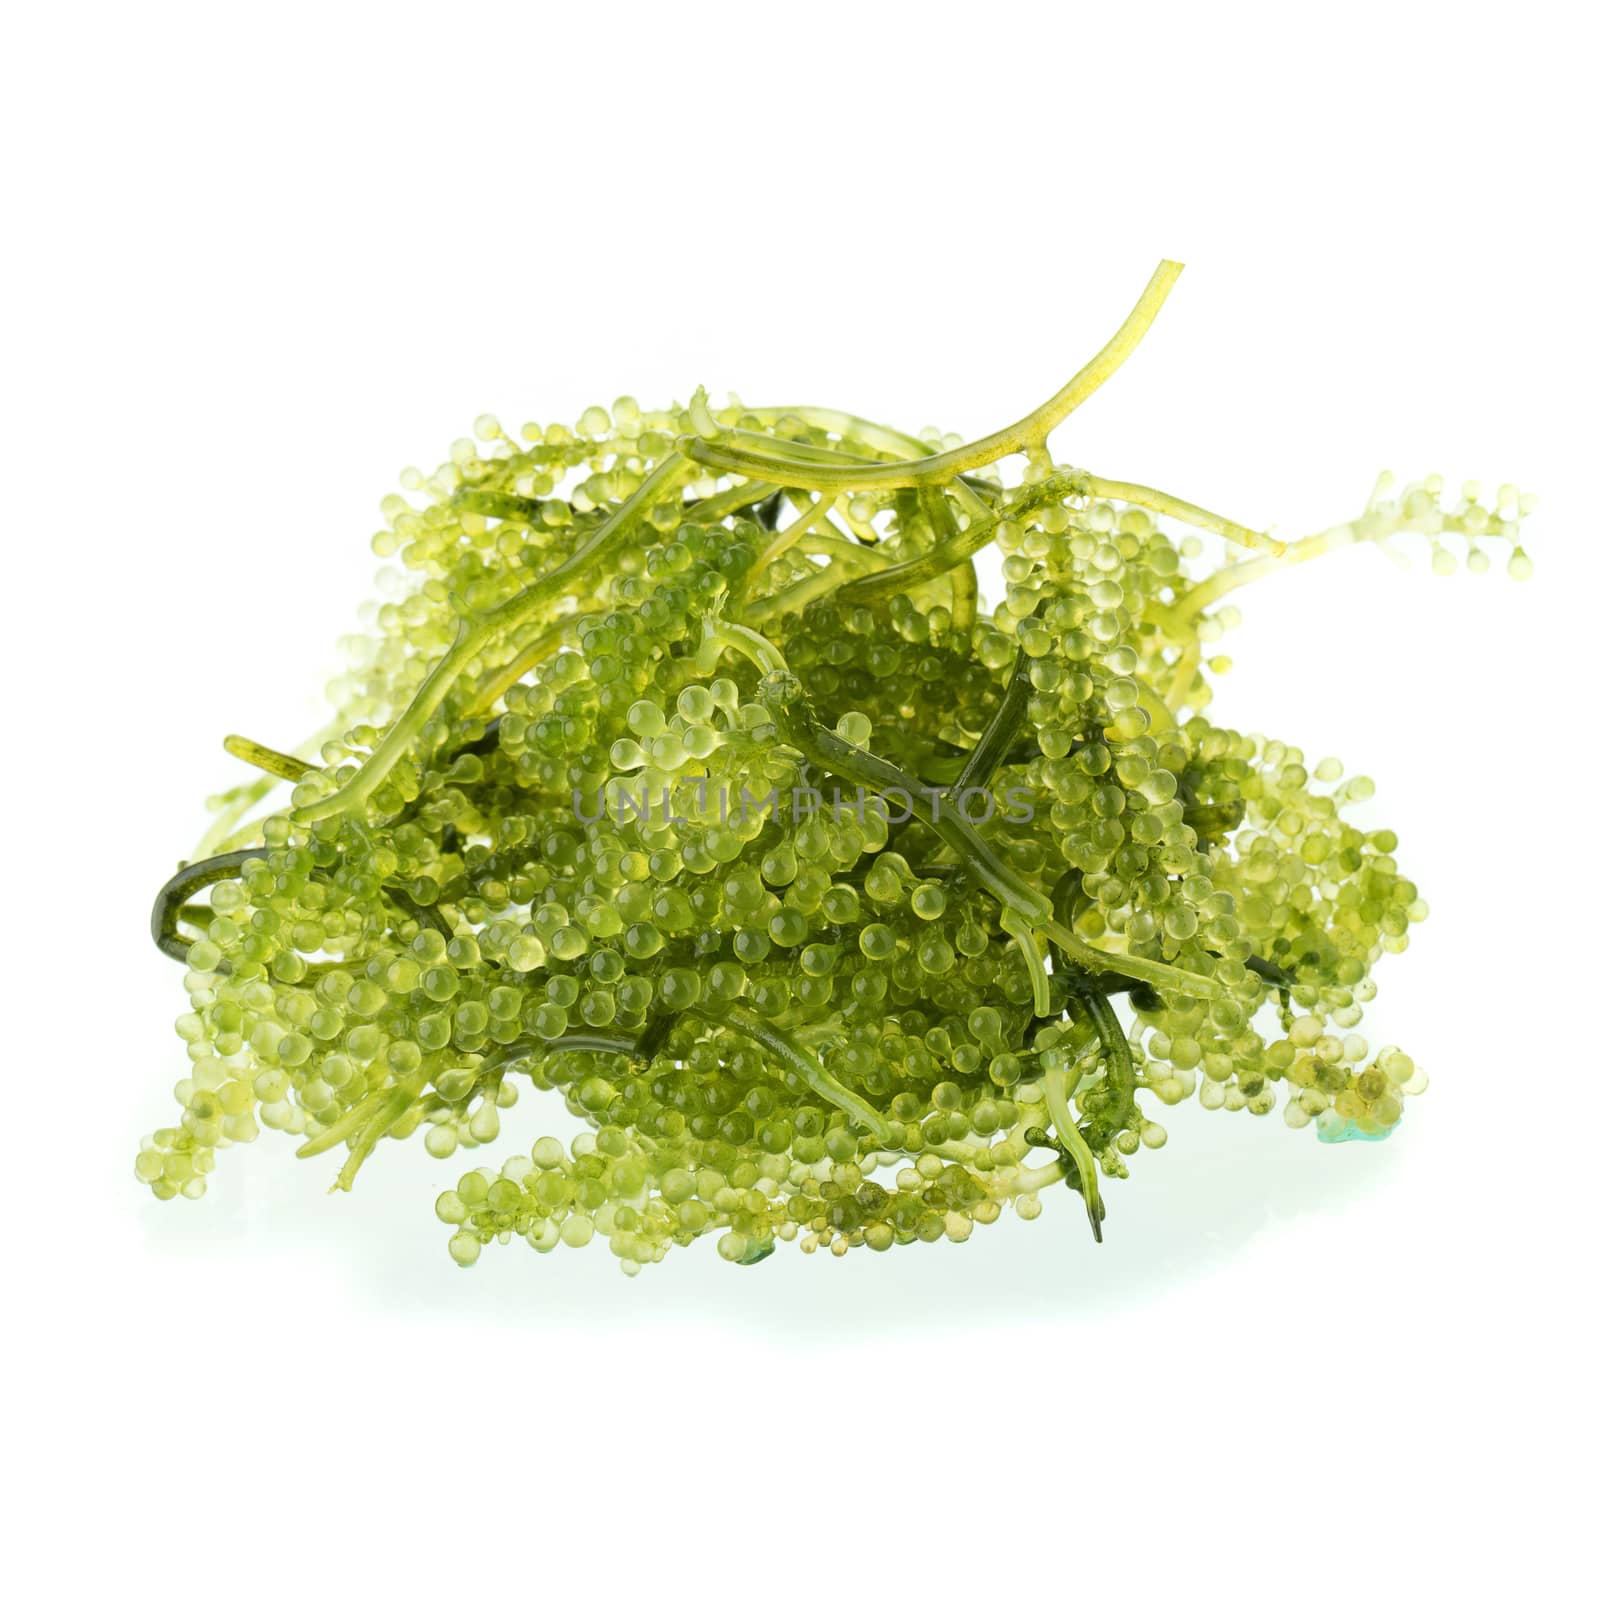 Umi-budou, Seaweed , Healthy sea food. Oval sea grapes seaweed.  by kaiskynet